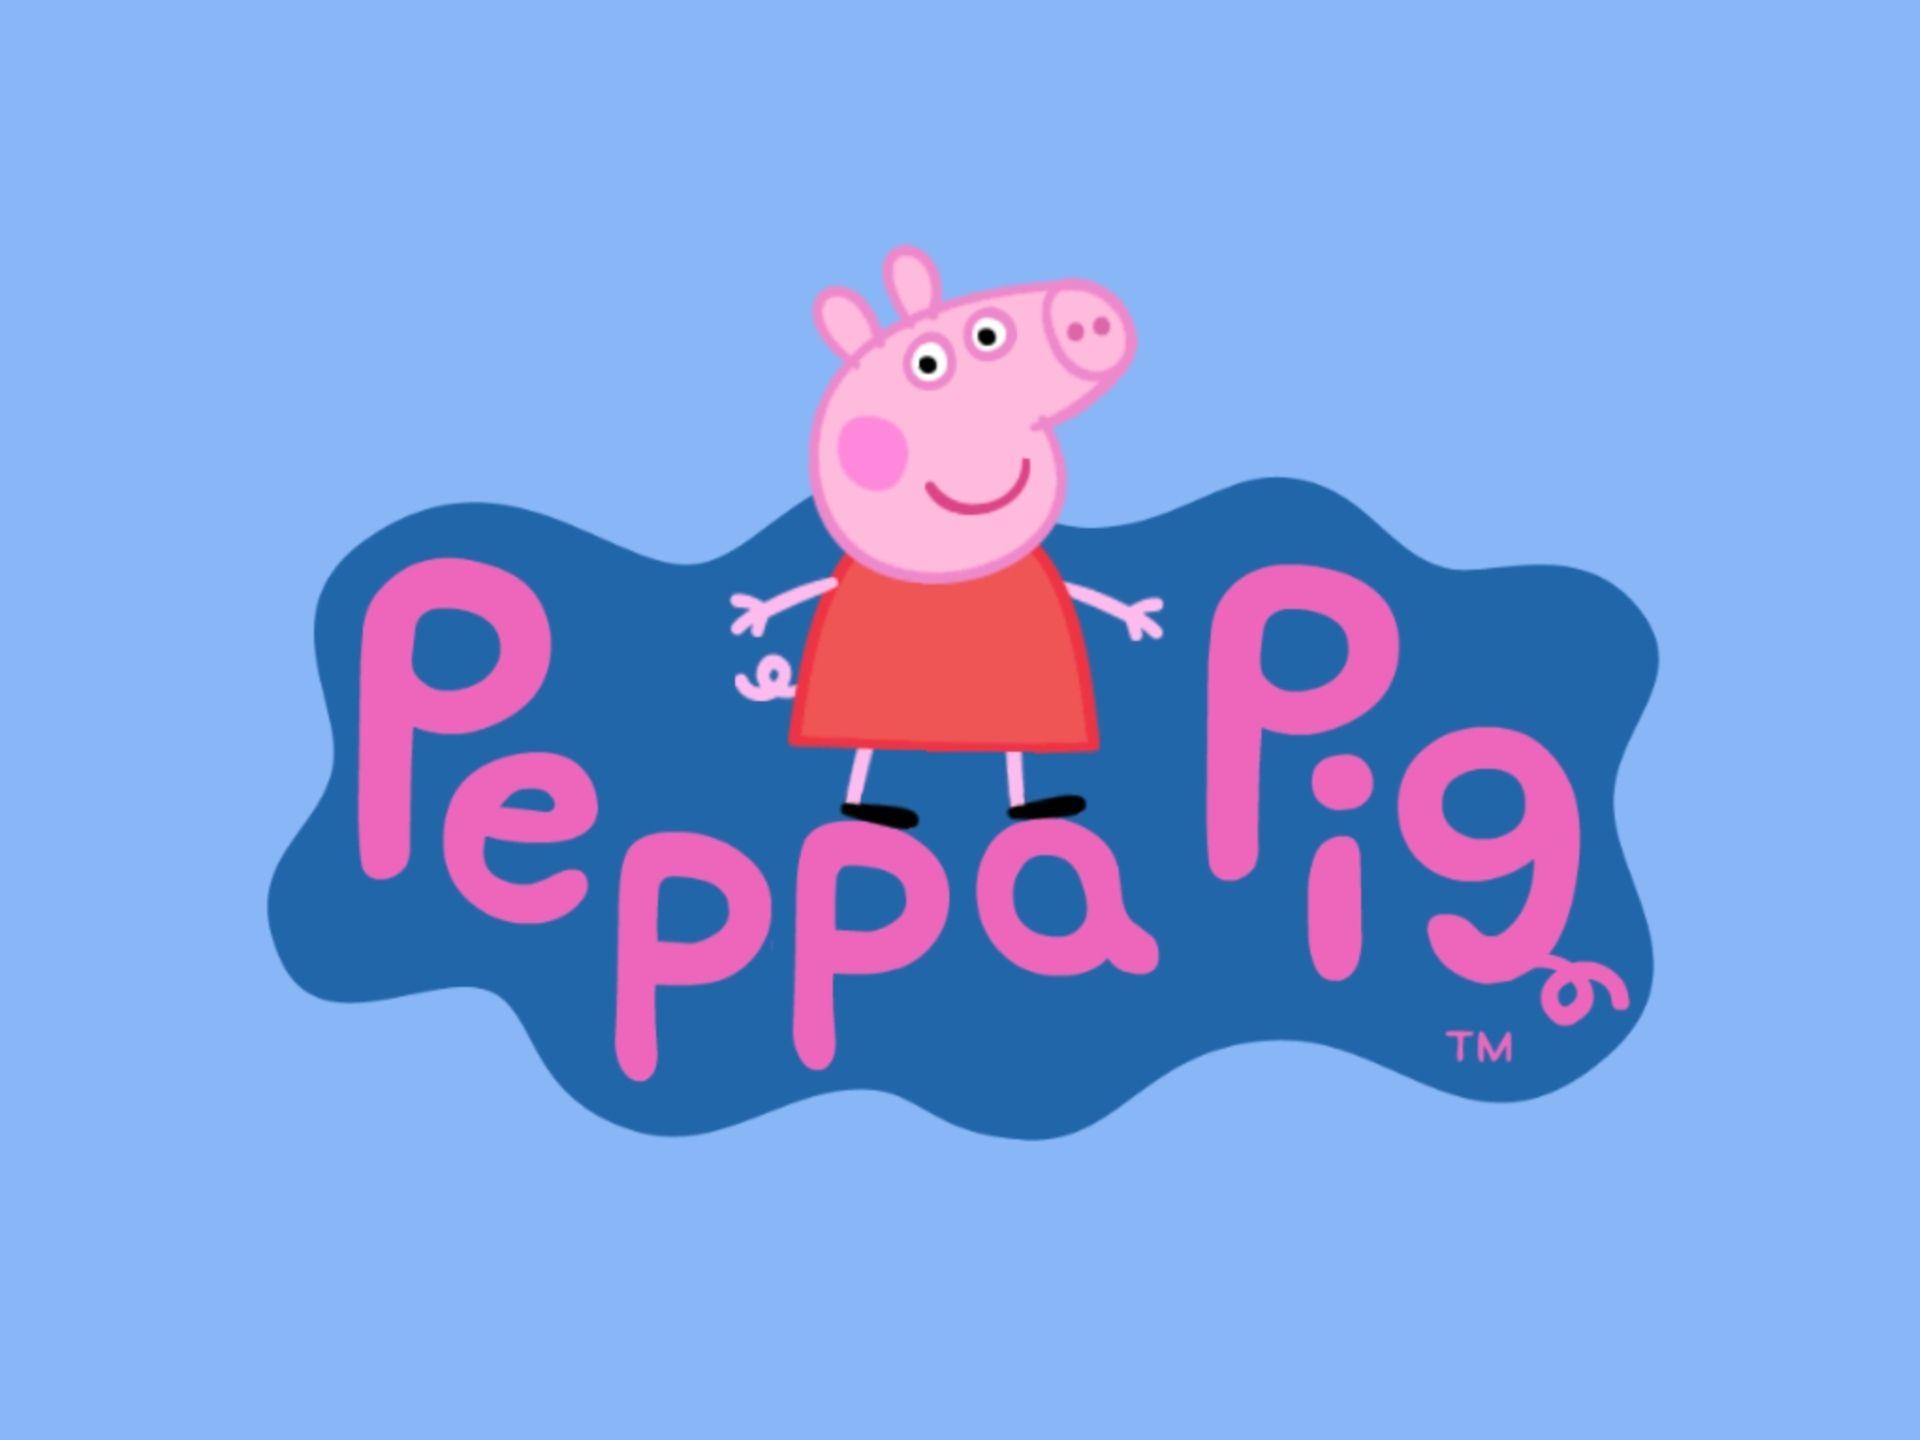 Peppa Pig HD Wallpaper. Wallpaper Catalog. Peppa pig, Pig